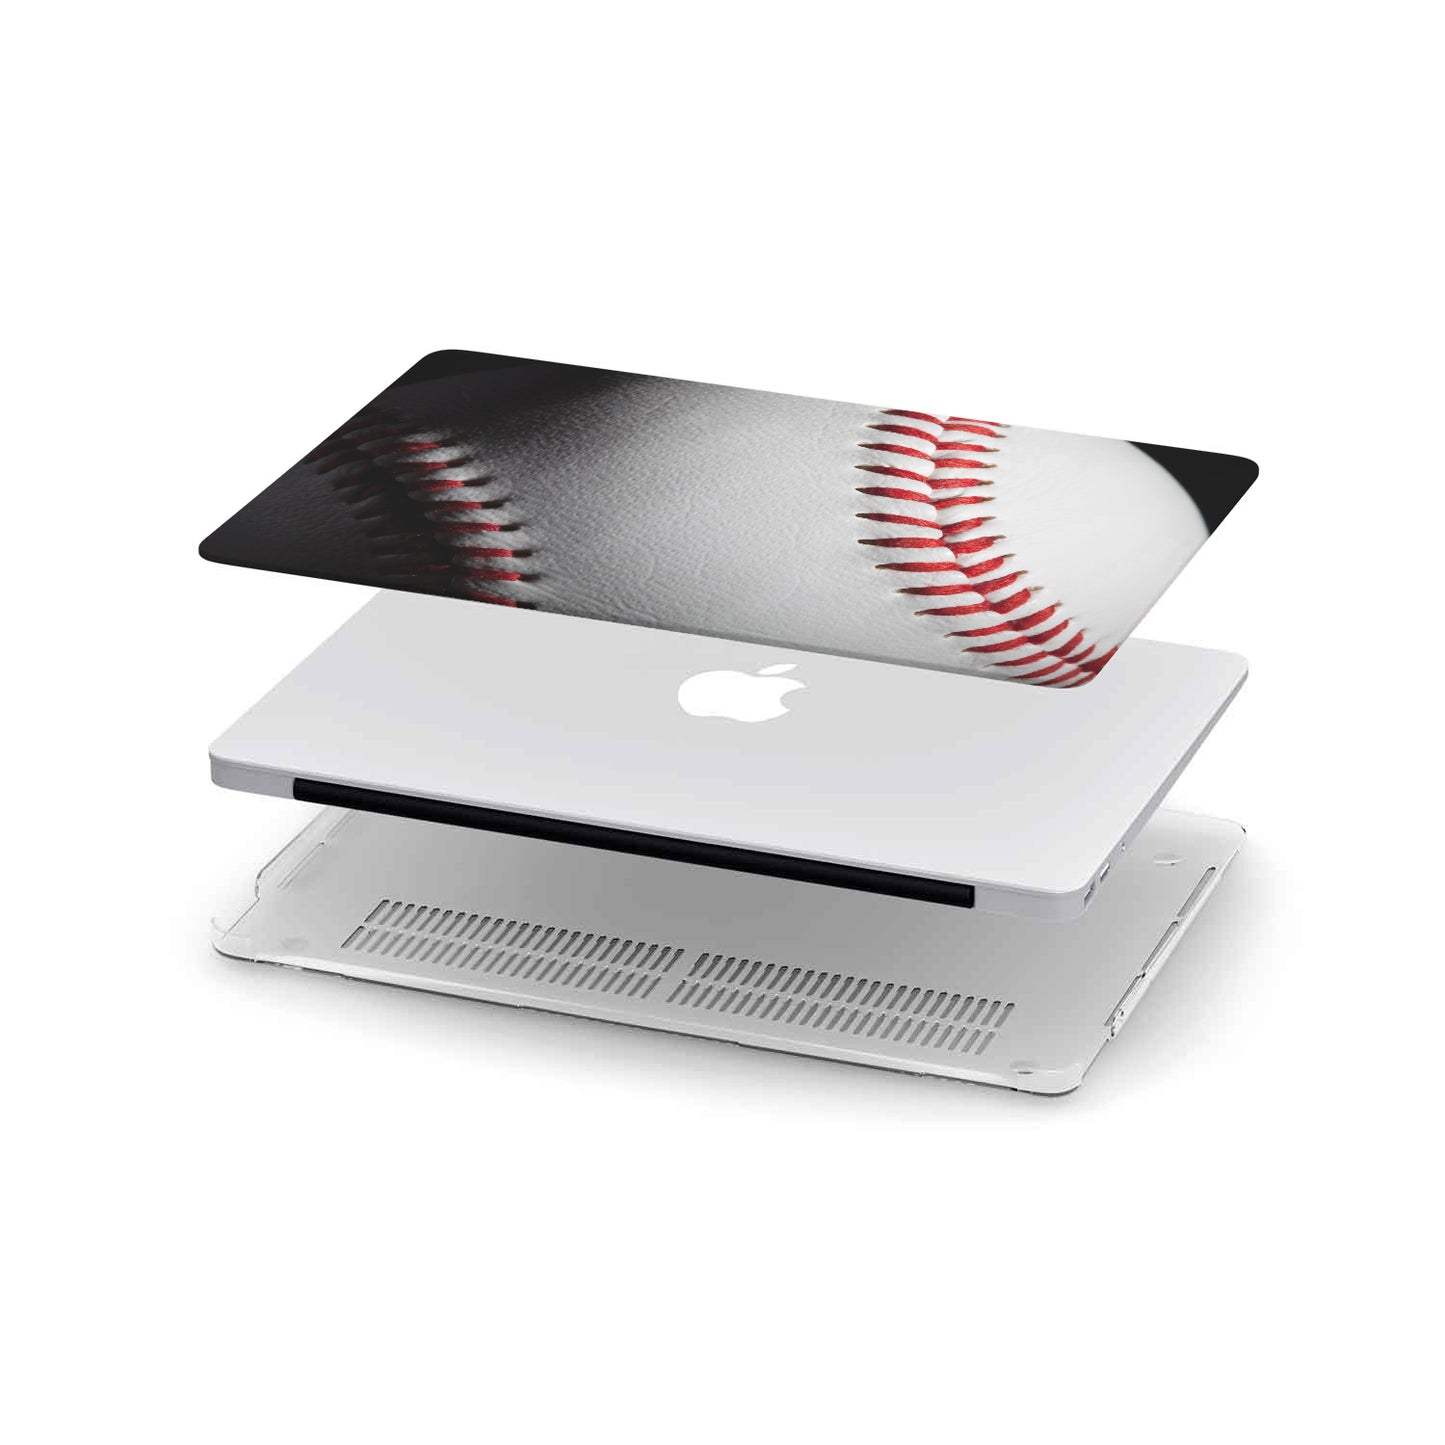 Personalized Macbook Hard Shell Case - Baseball